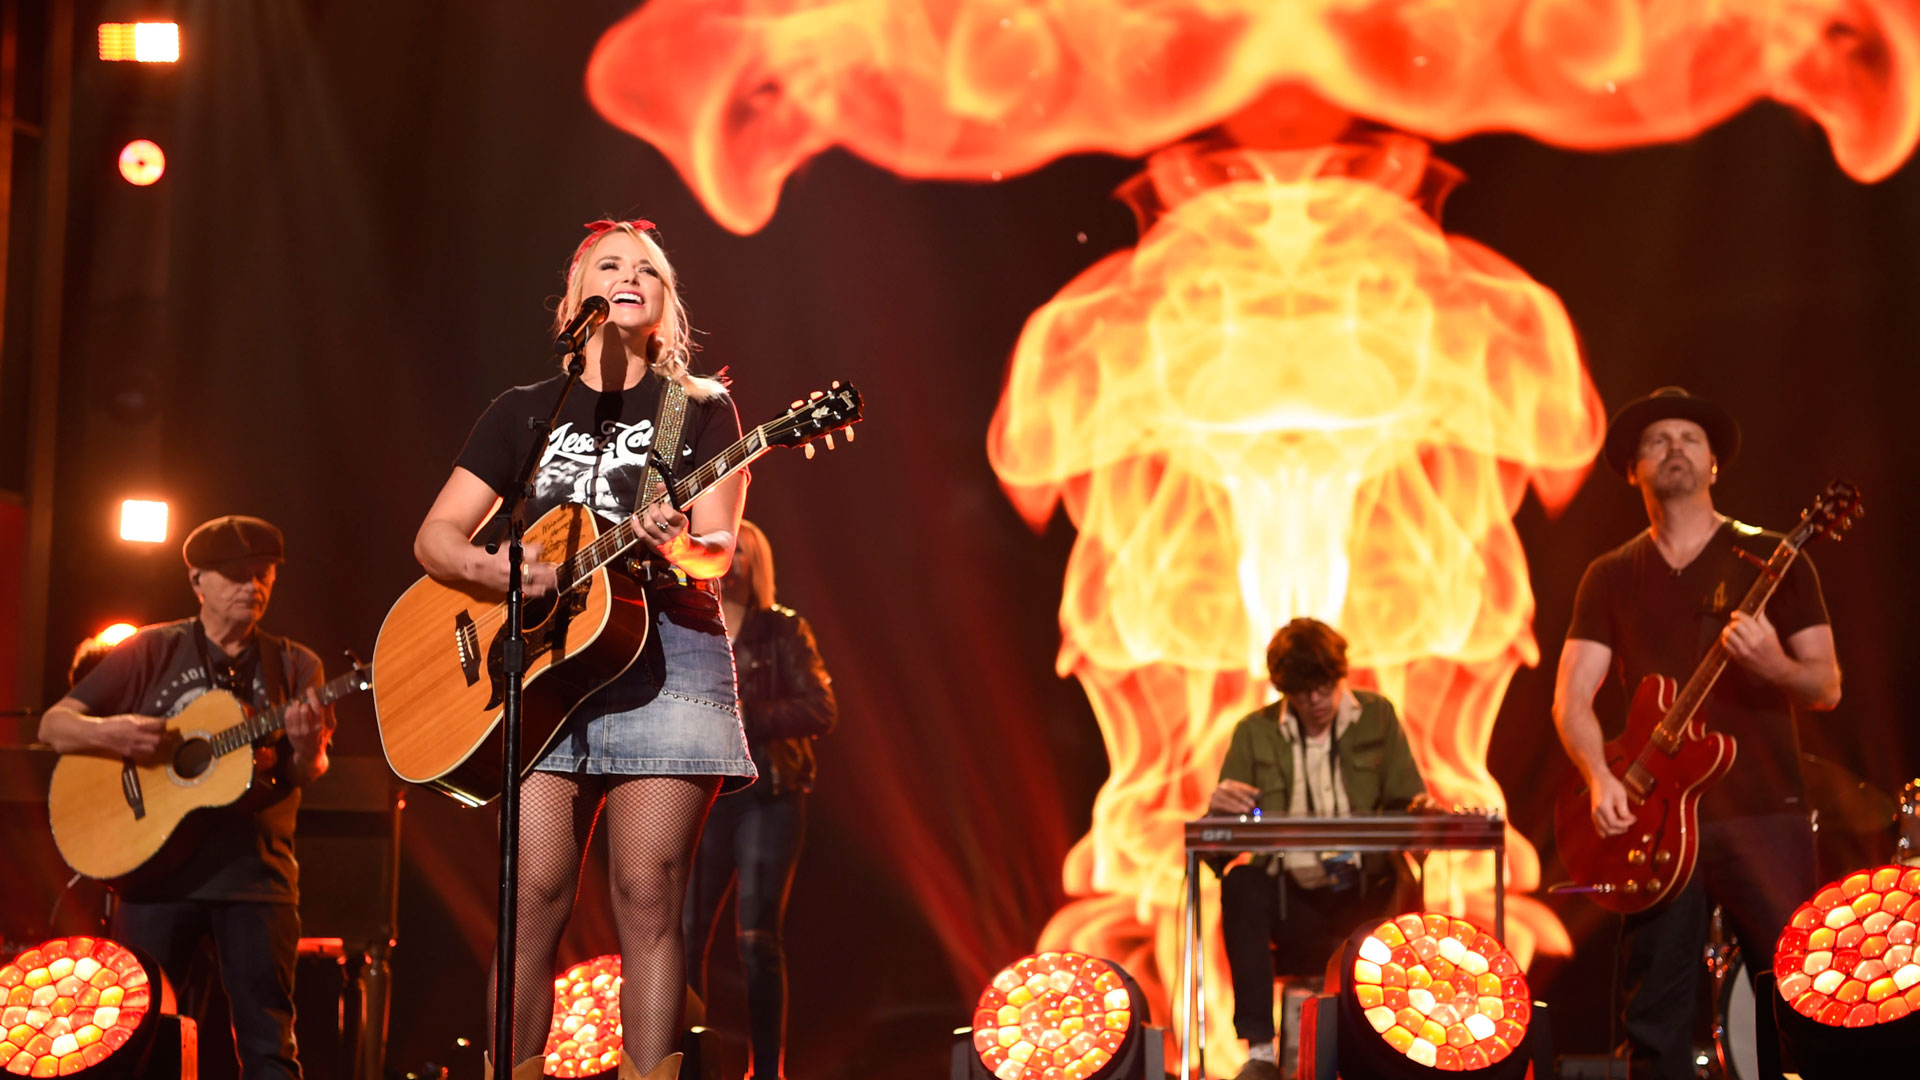 Sunscreen might be necessary for Miranda Lambert's fiery performance at the 53rd ACM Awards.